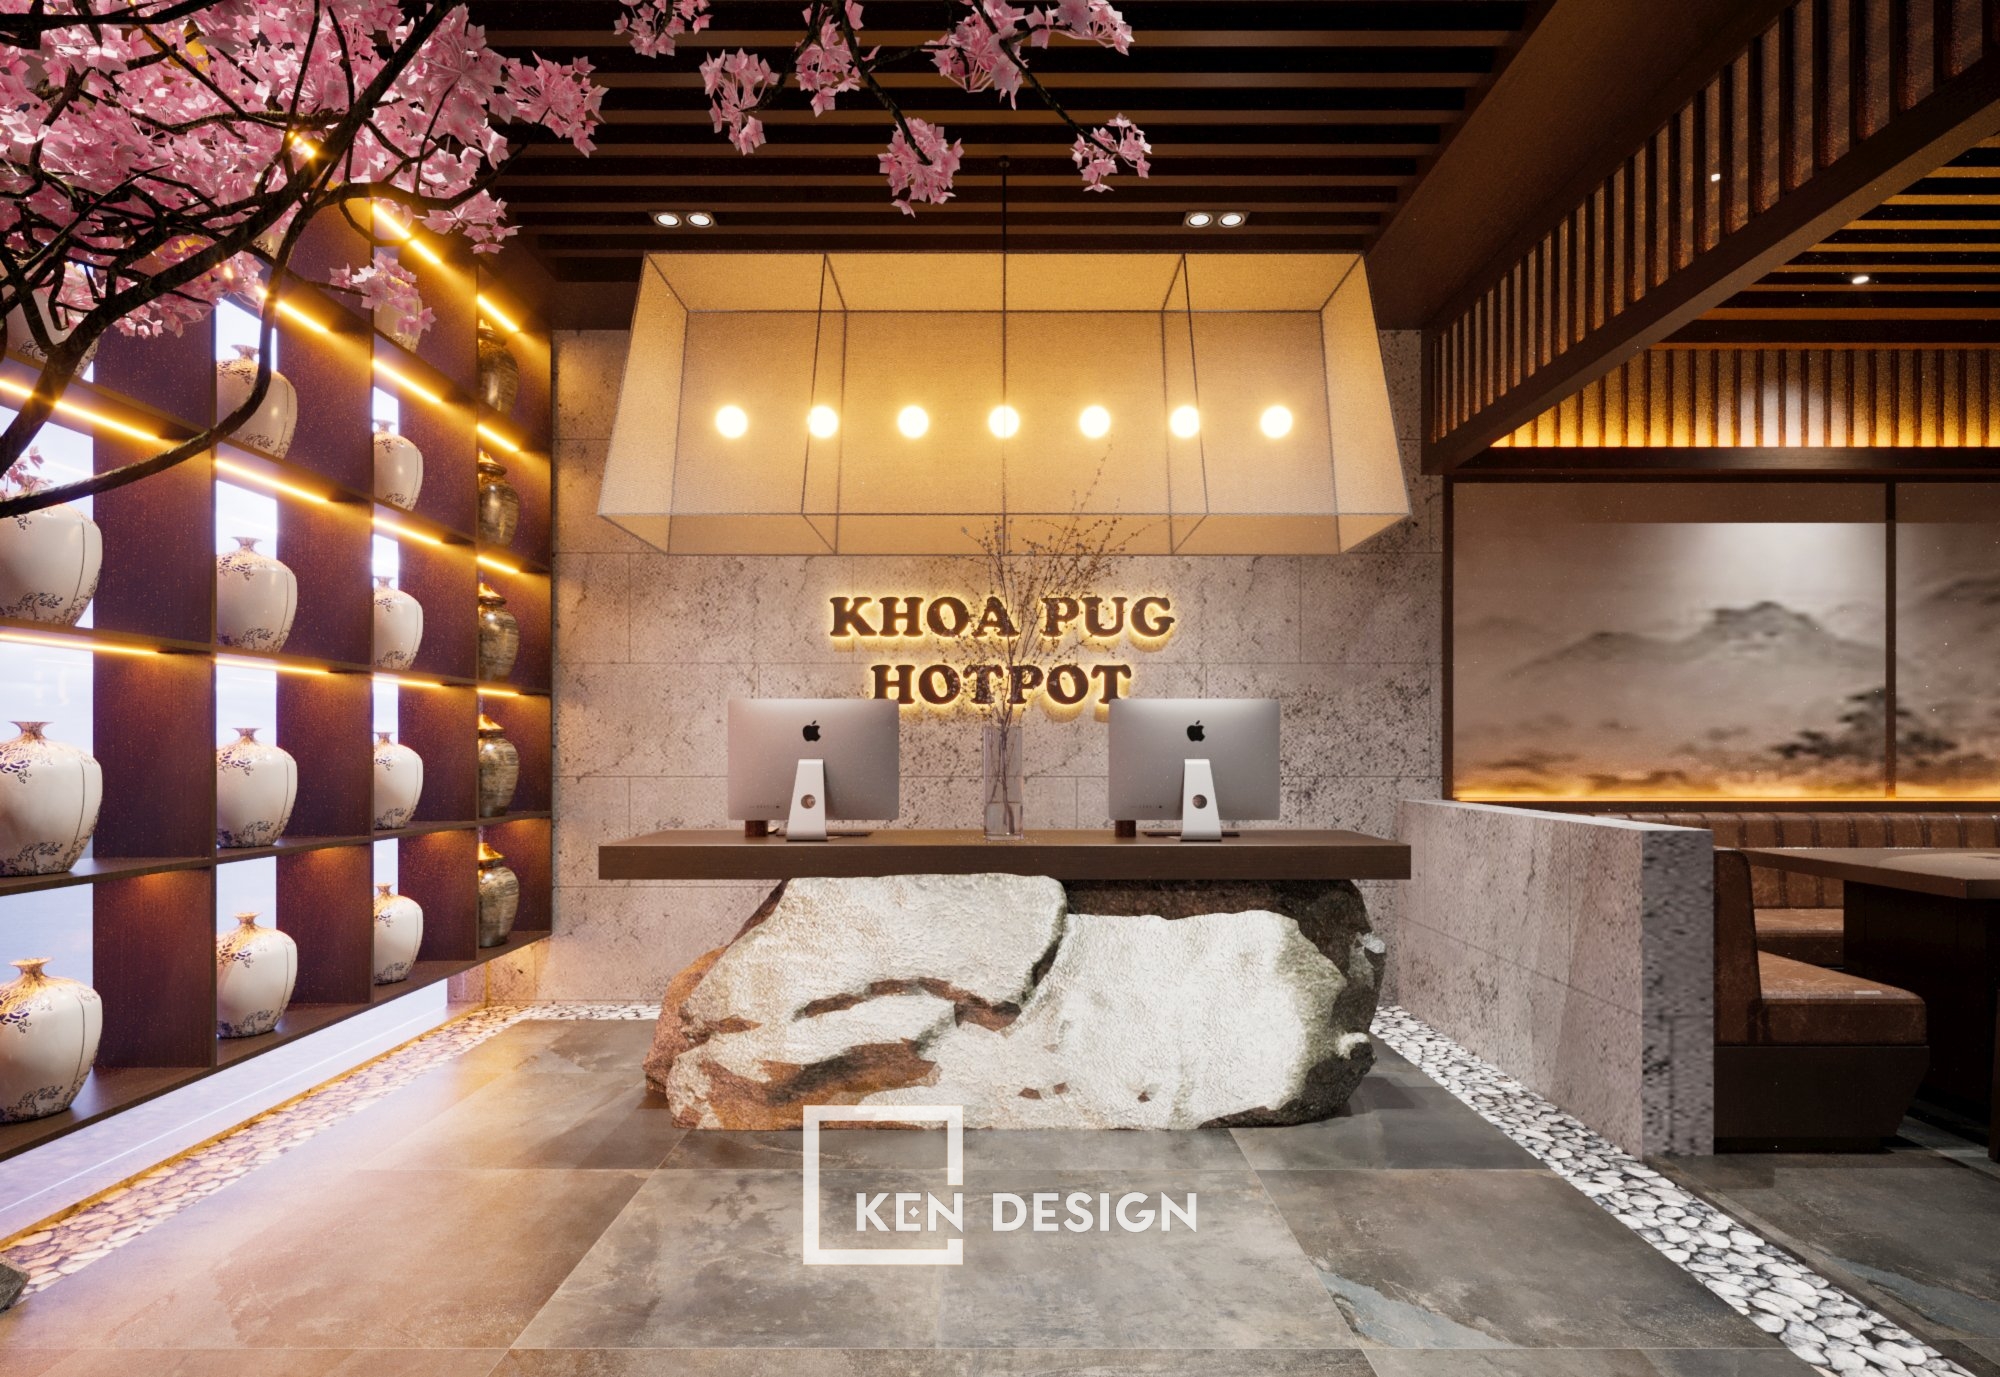 Design of Khoa Pug HotPot Restaurant